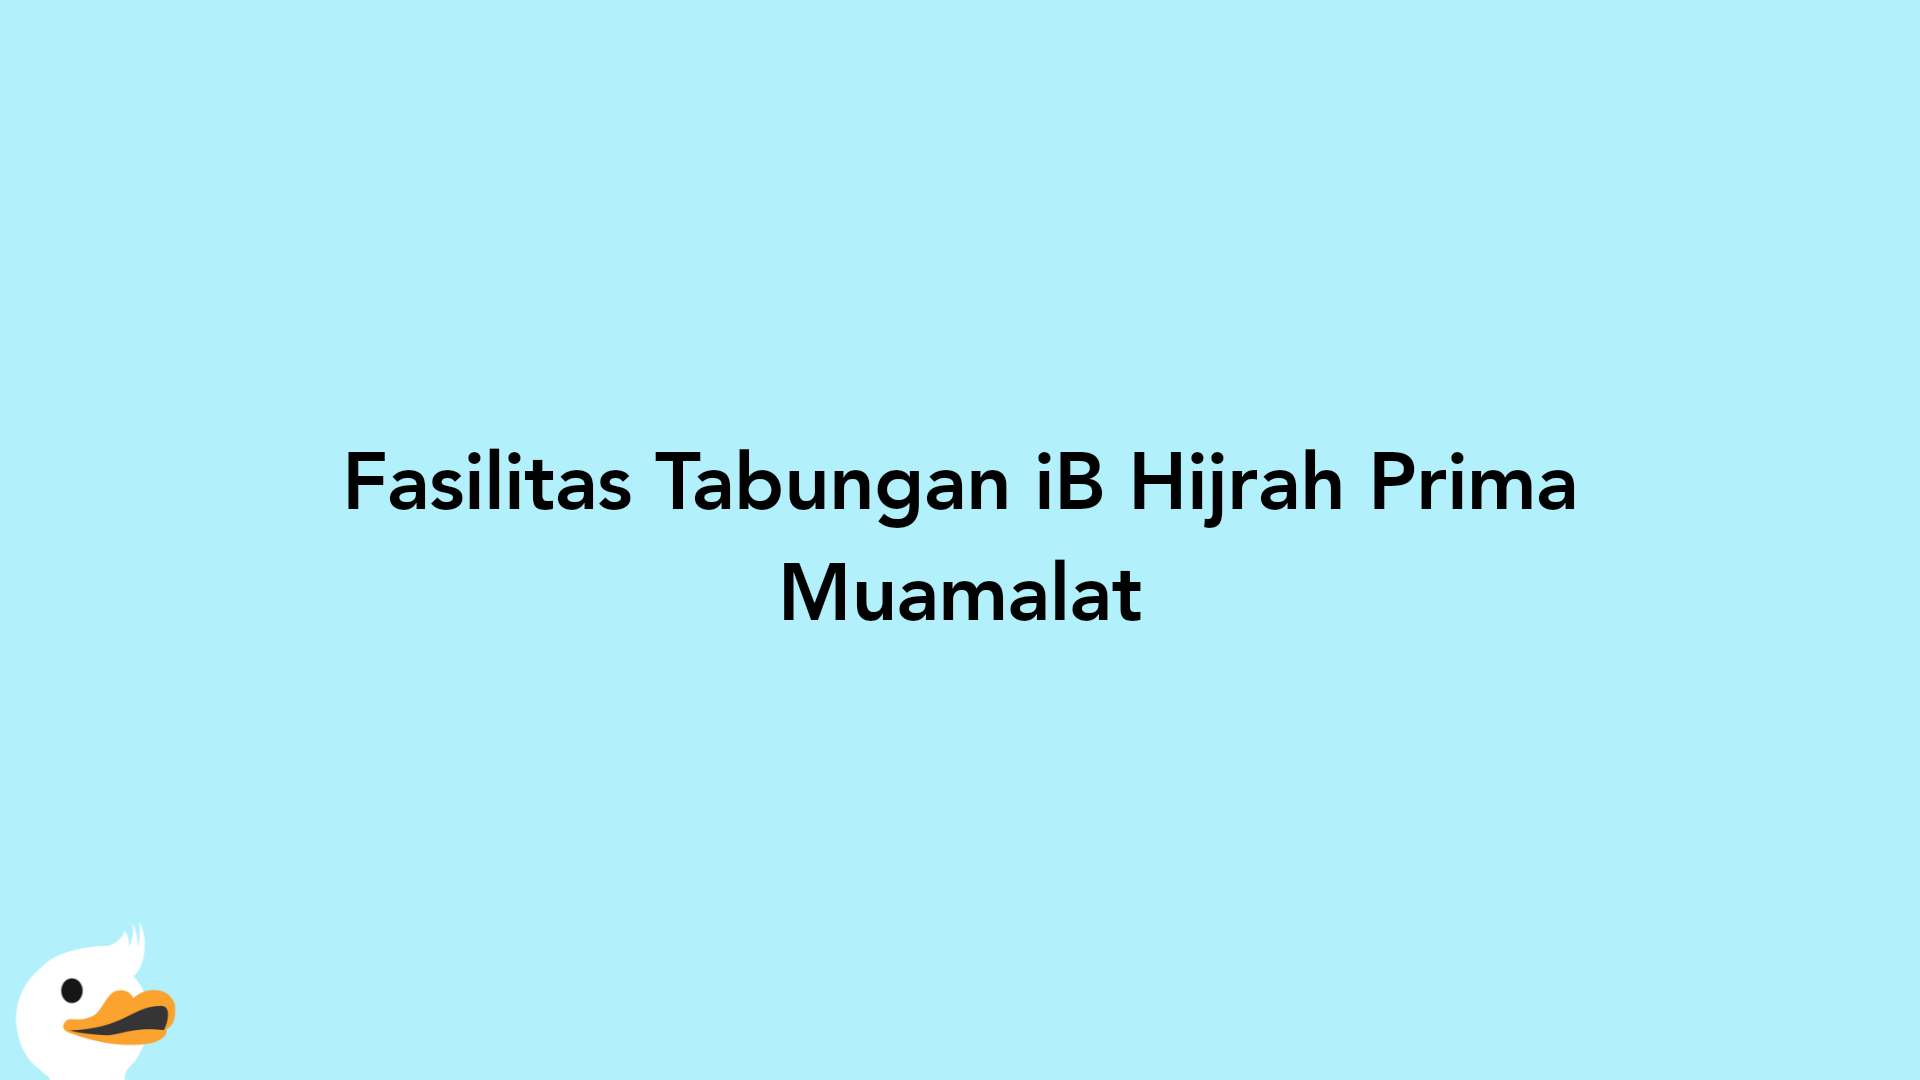 Fasilitas Tabungan iB Hijrah Prima Muamalat